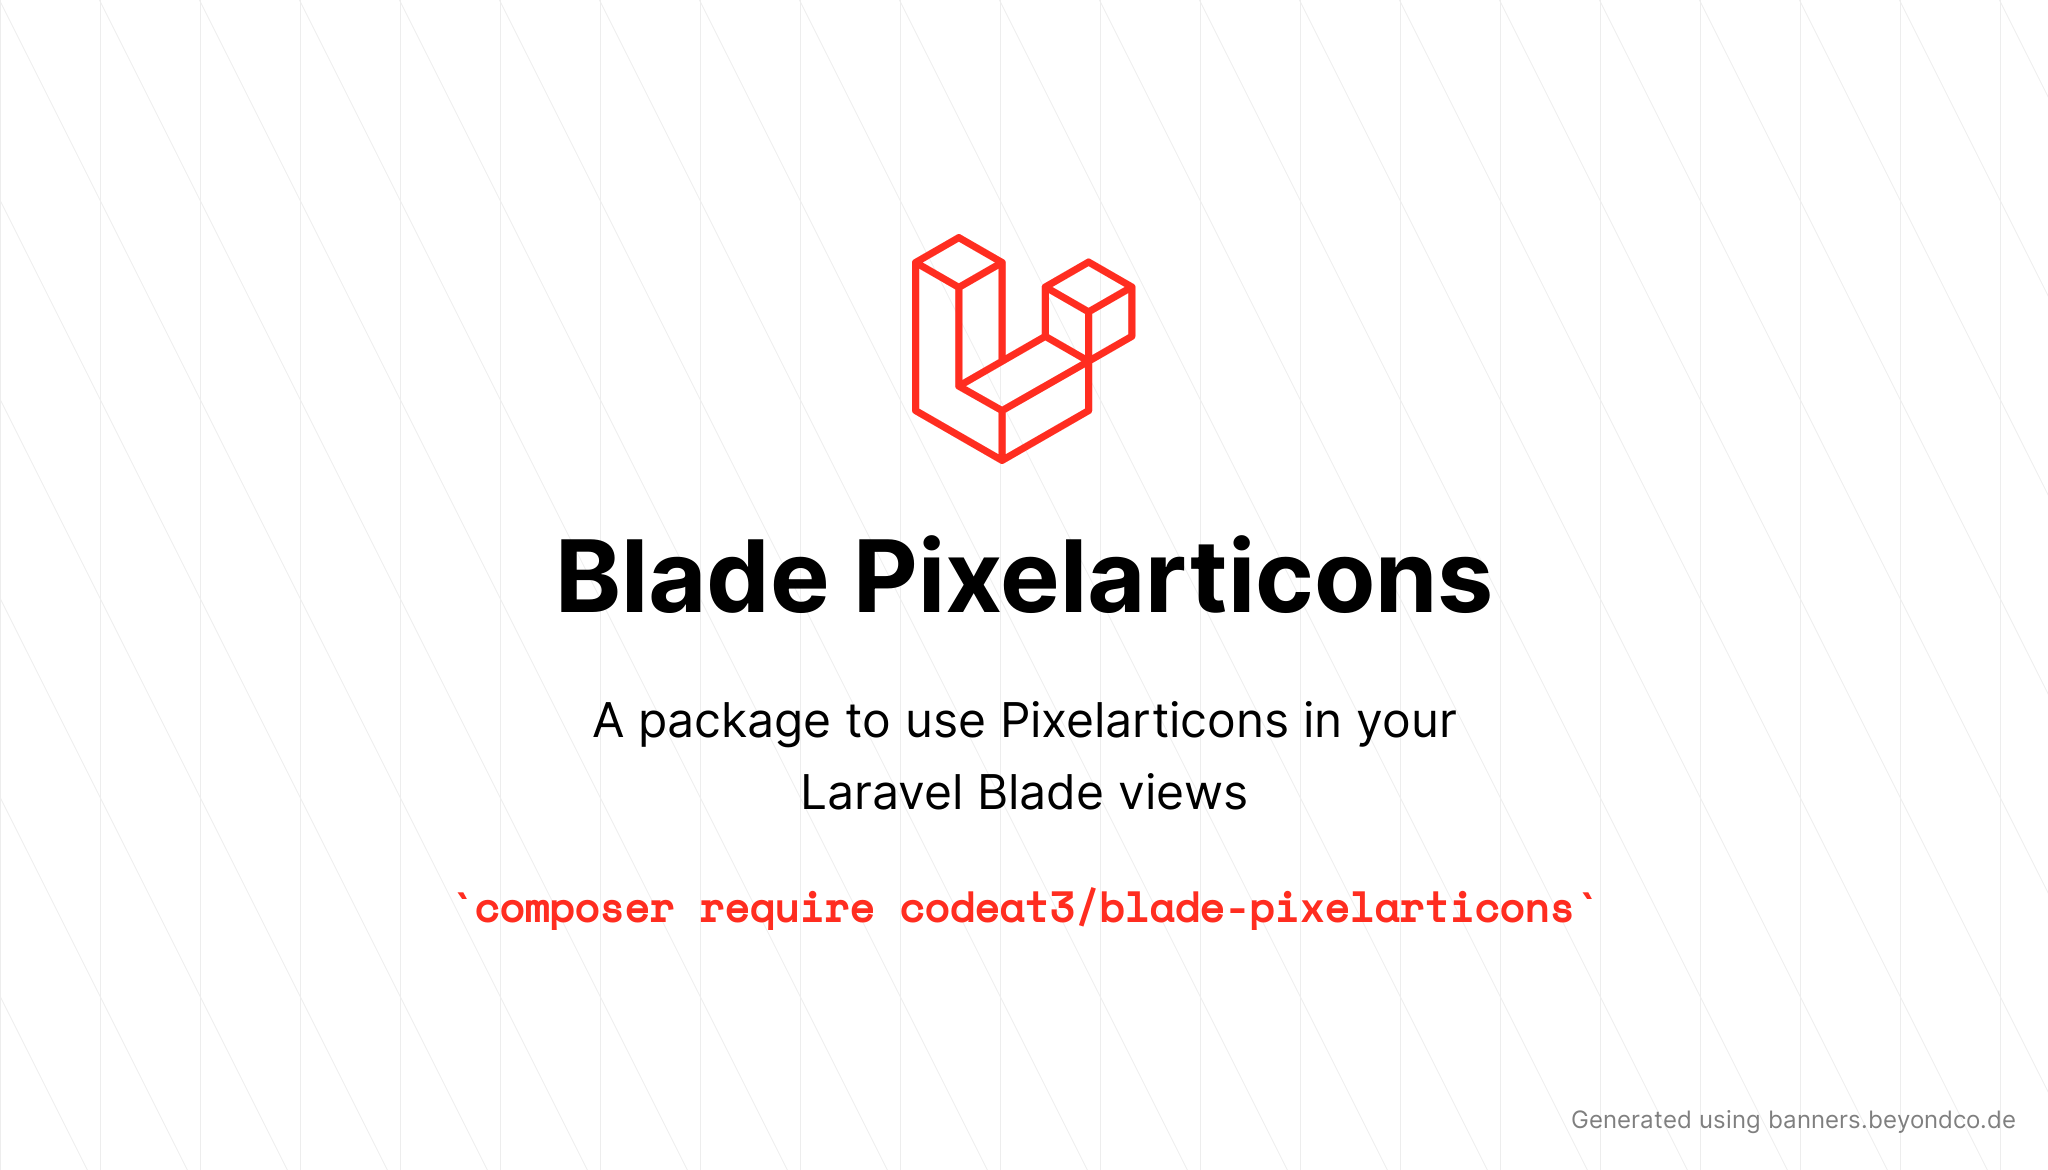 socialcard-blade-pixelarticons.png